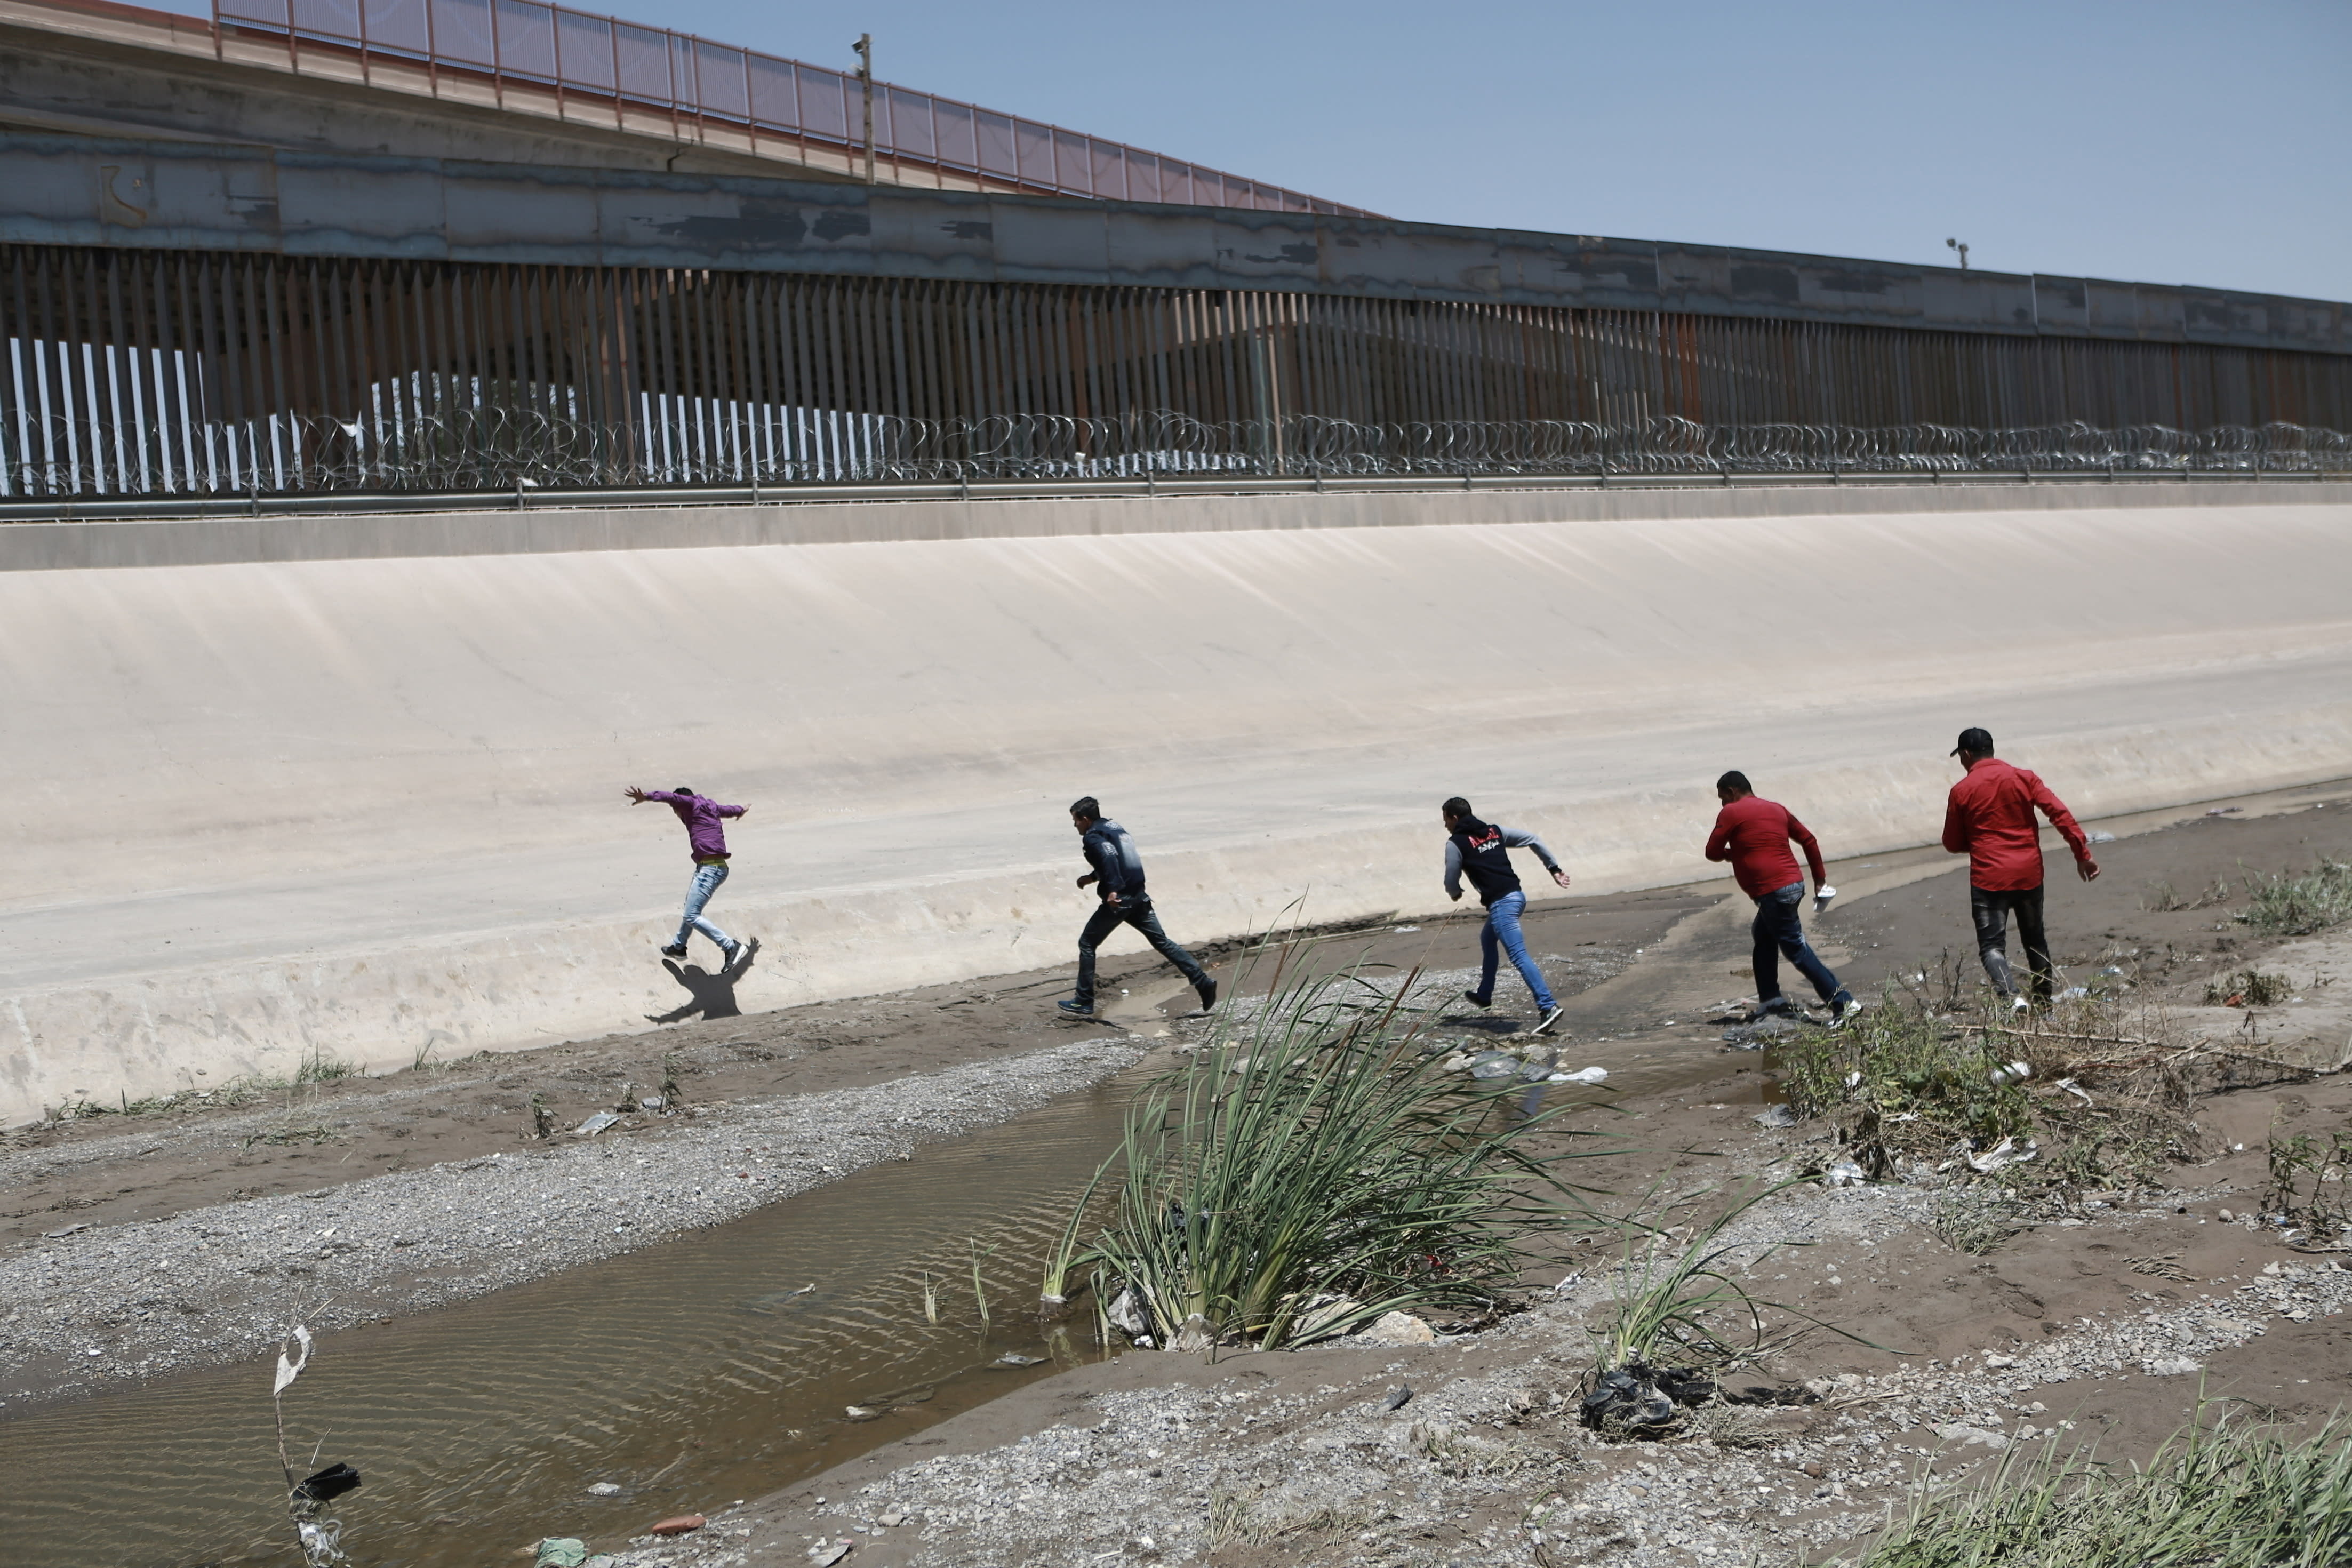 Before Massacre El Paso Became A Hot Spot On Mexican Border